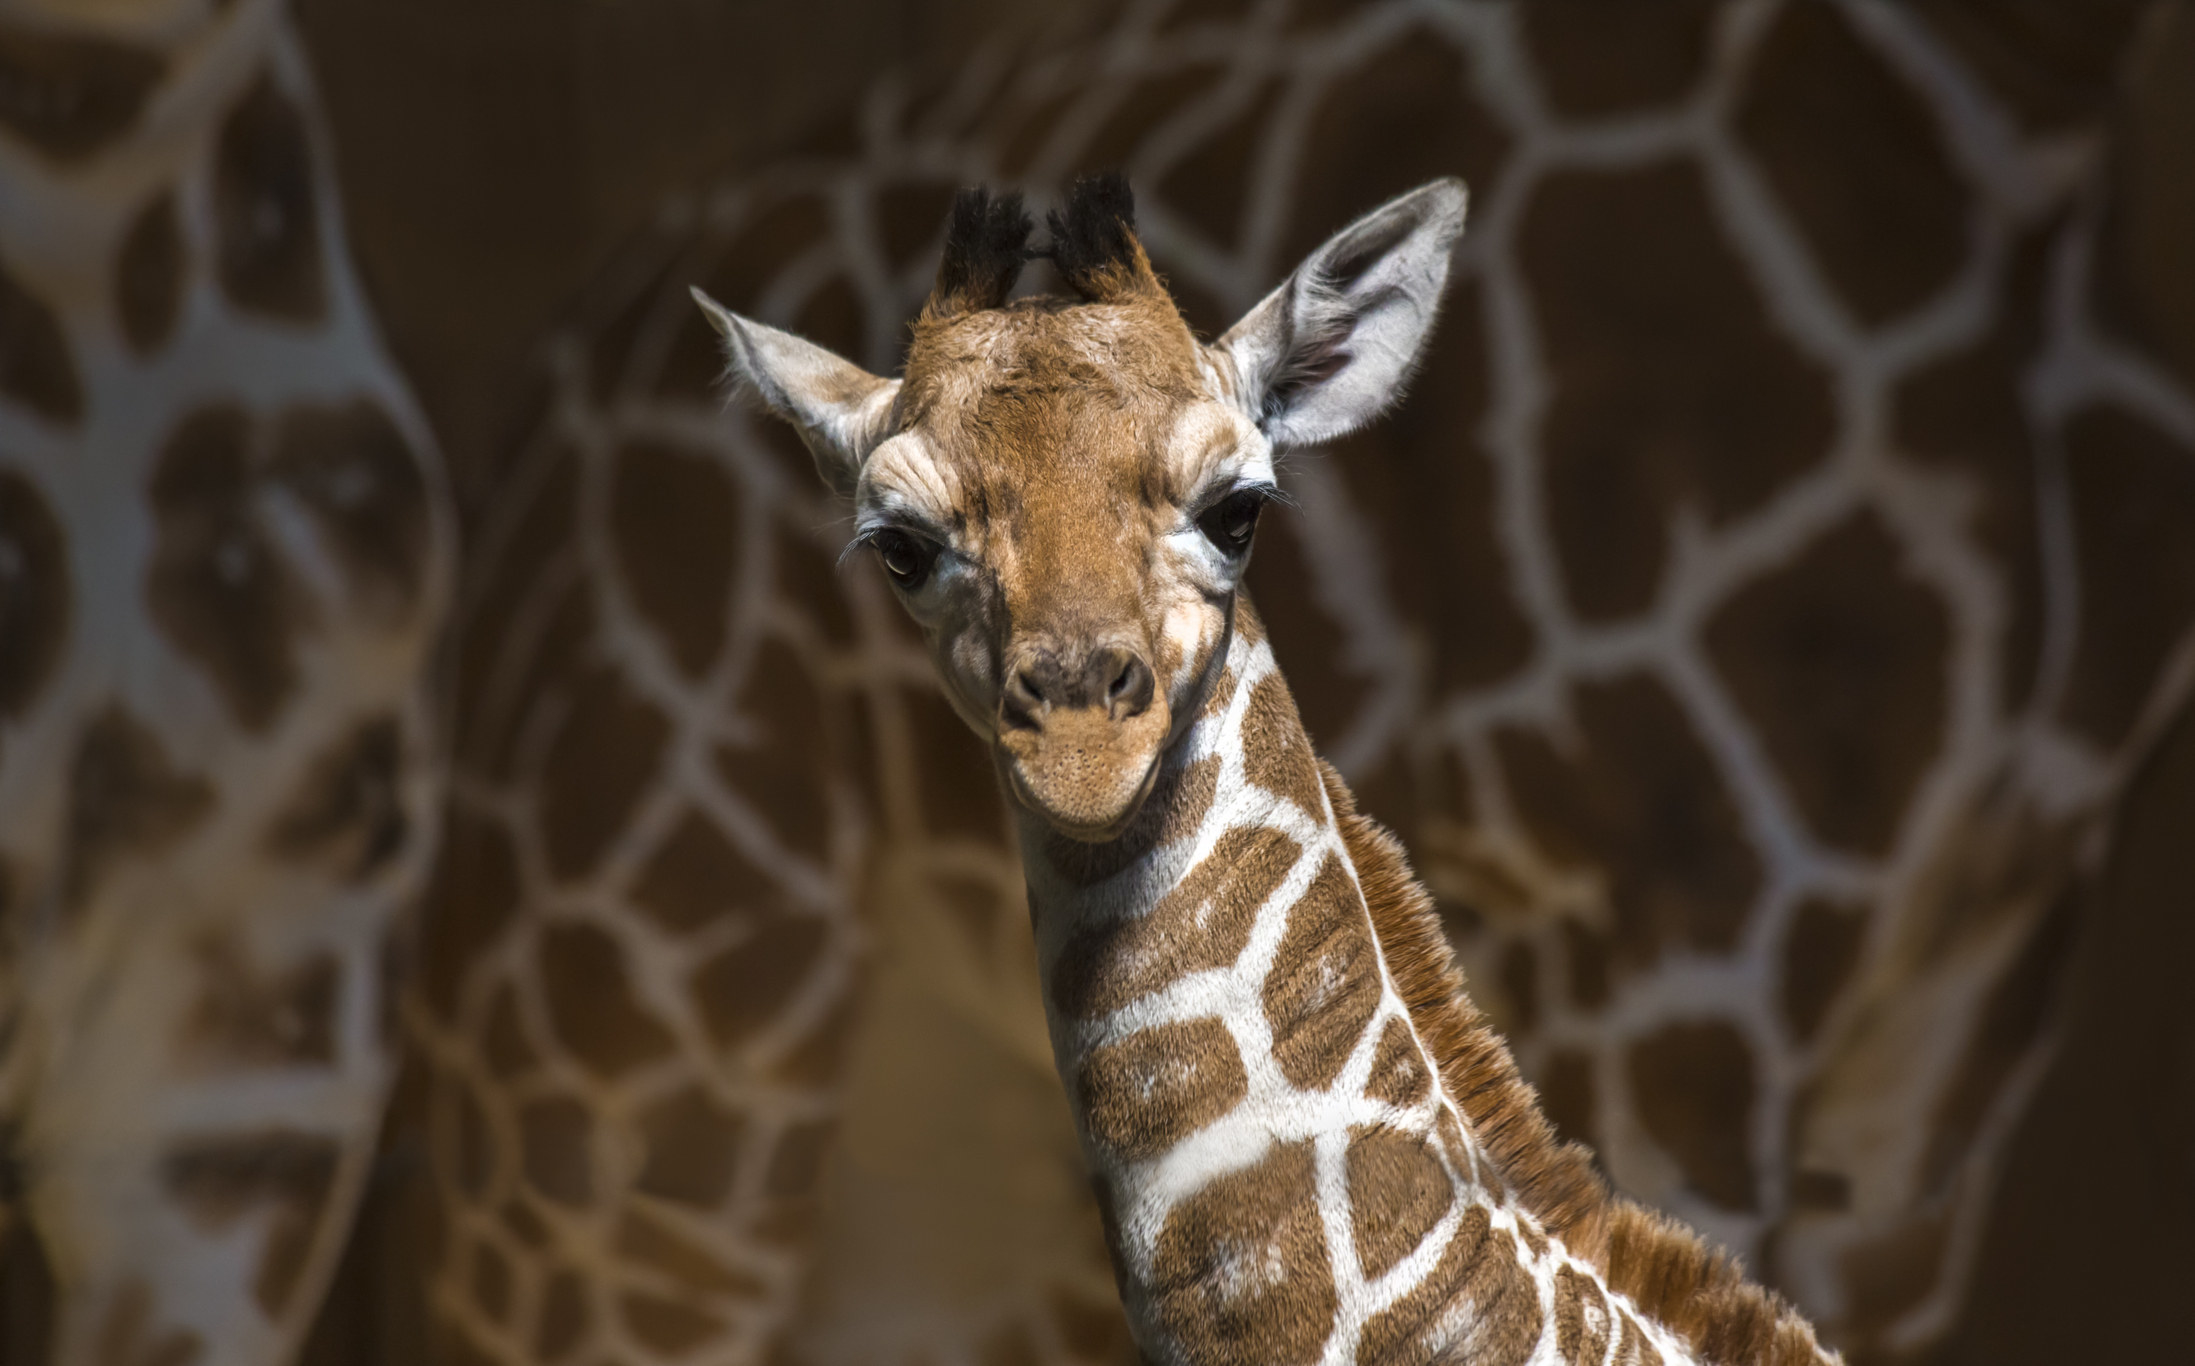 a baby giraffe looking straight at the camera